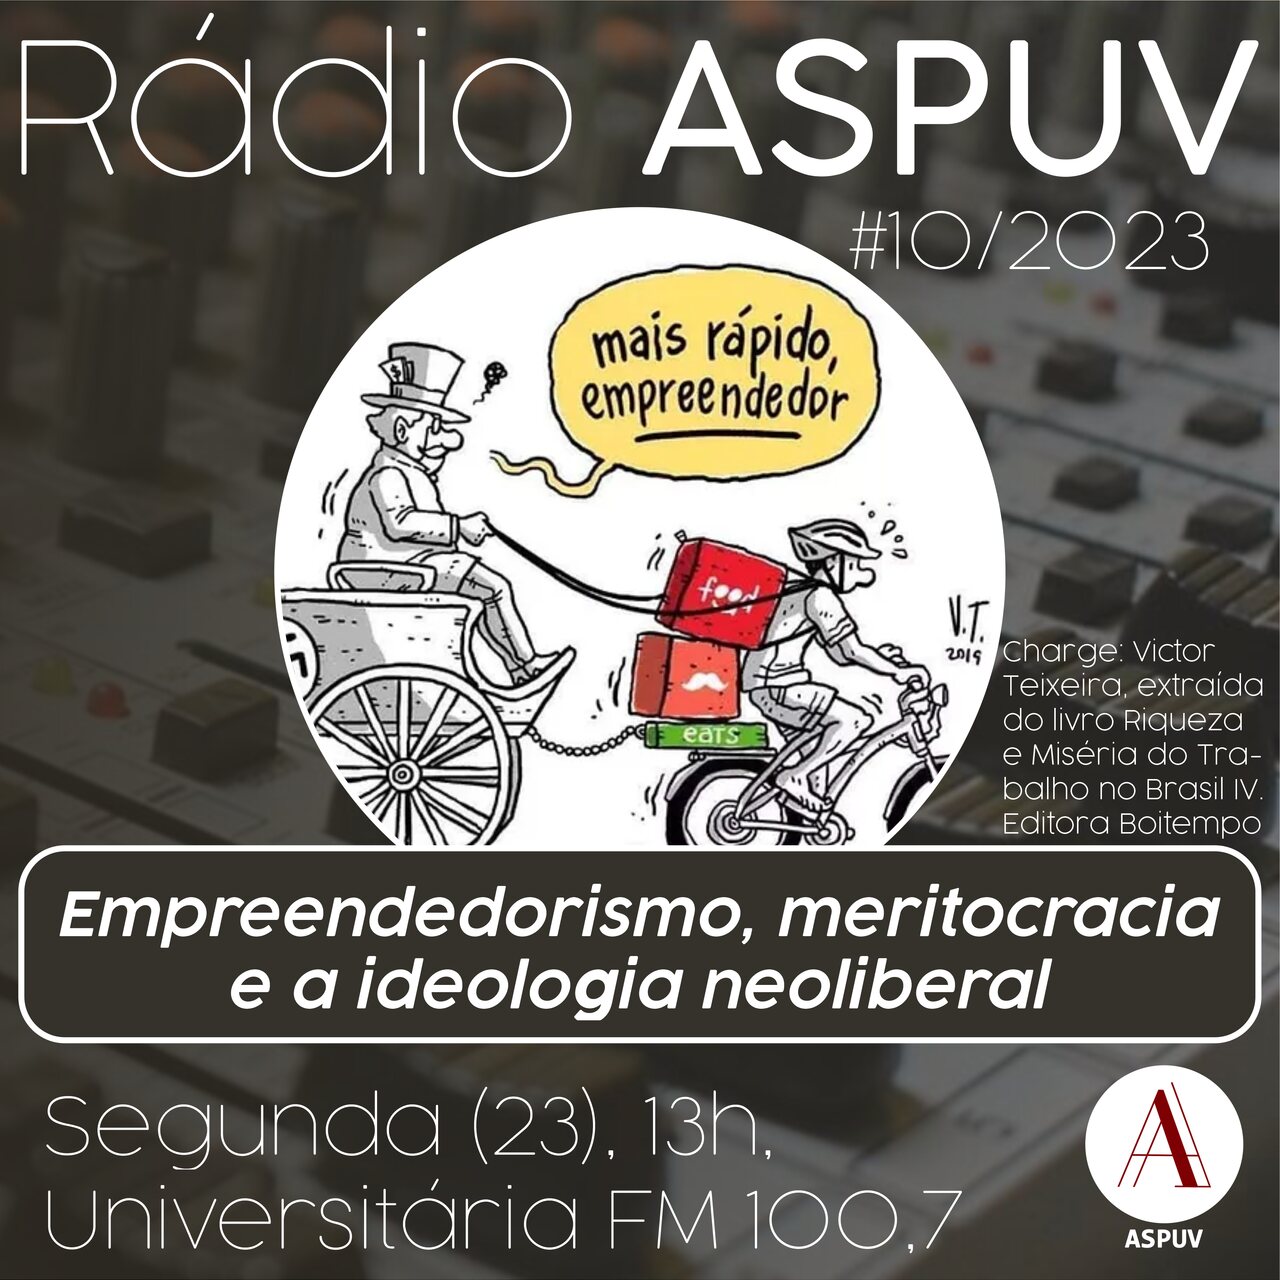 Rádio ASPUV #10/23 Empreendedorismo, meritocracia e ideologia neoliberal